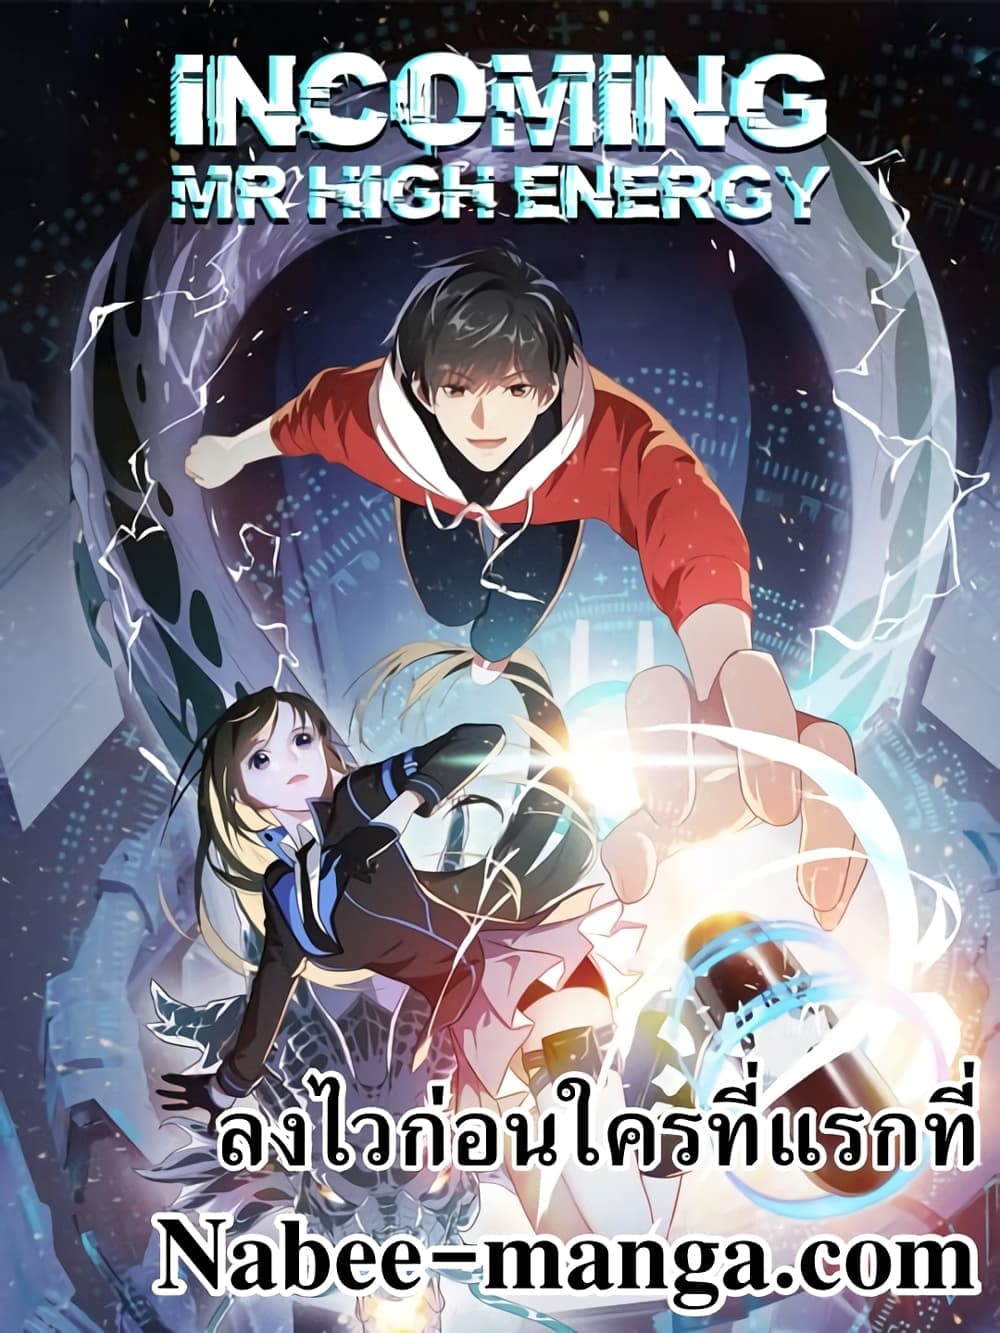 High Energy Strikes à¸à¸­à¸à¸à¸µà¹ 234 (1)